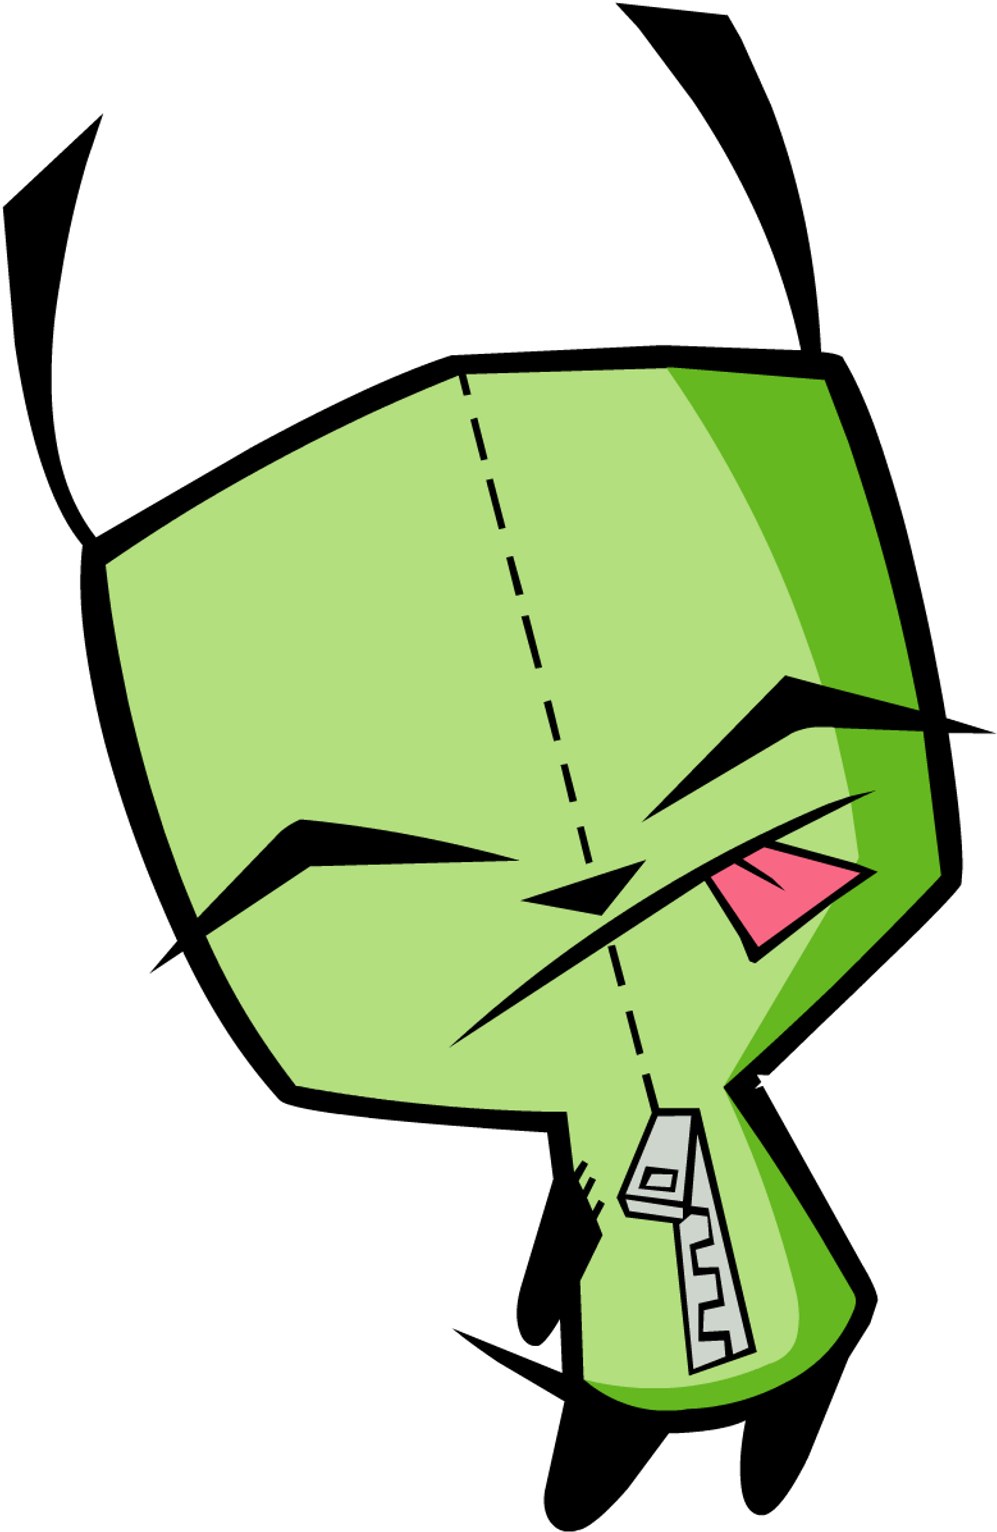 Cartoon Character With A Zipper